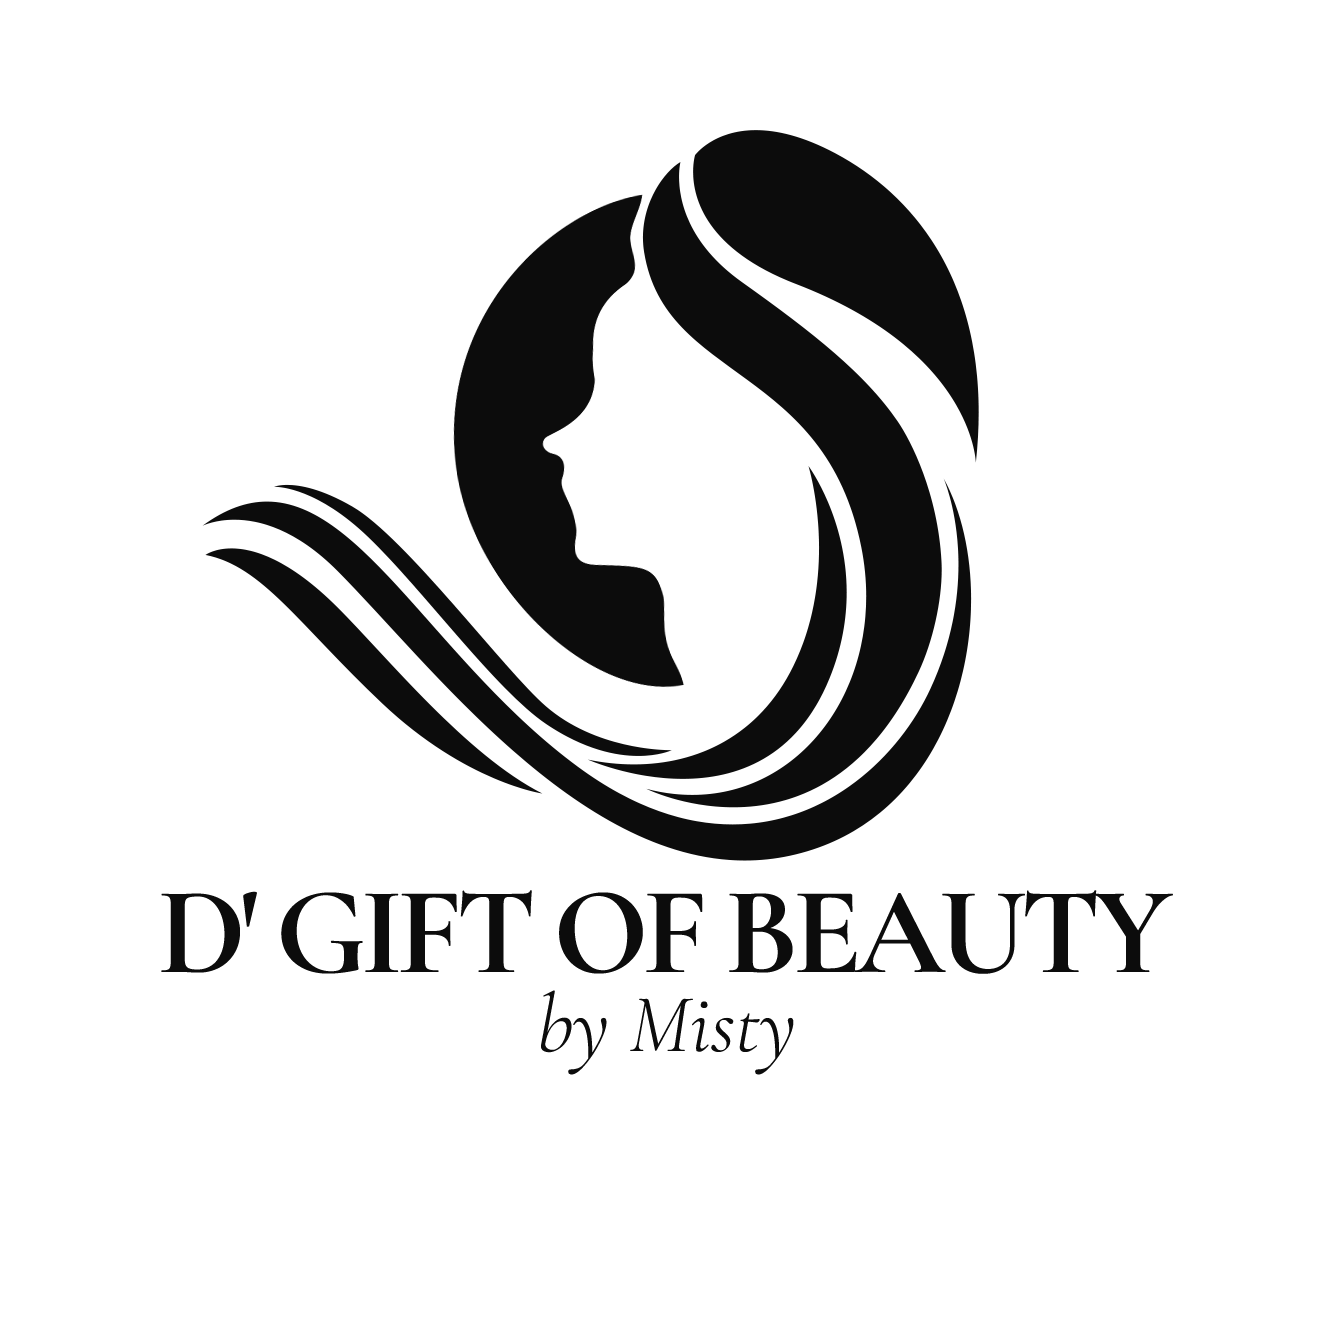 D’ GIFT OF BEAUTY by Misty